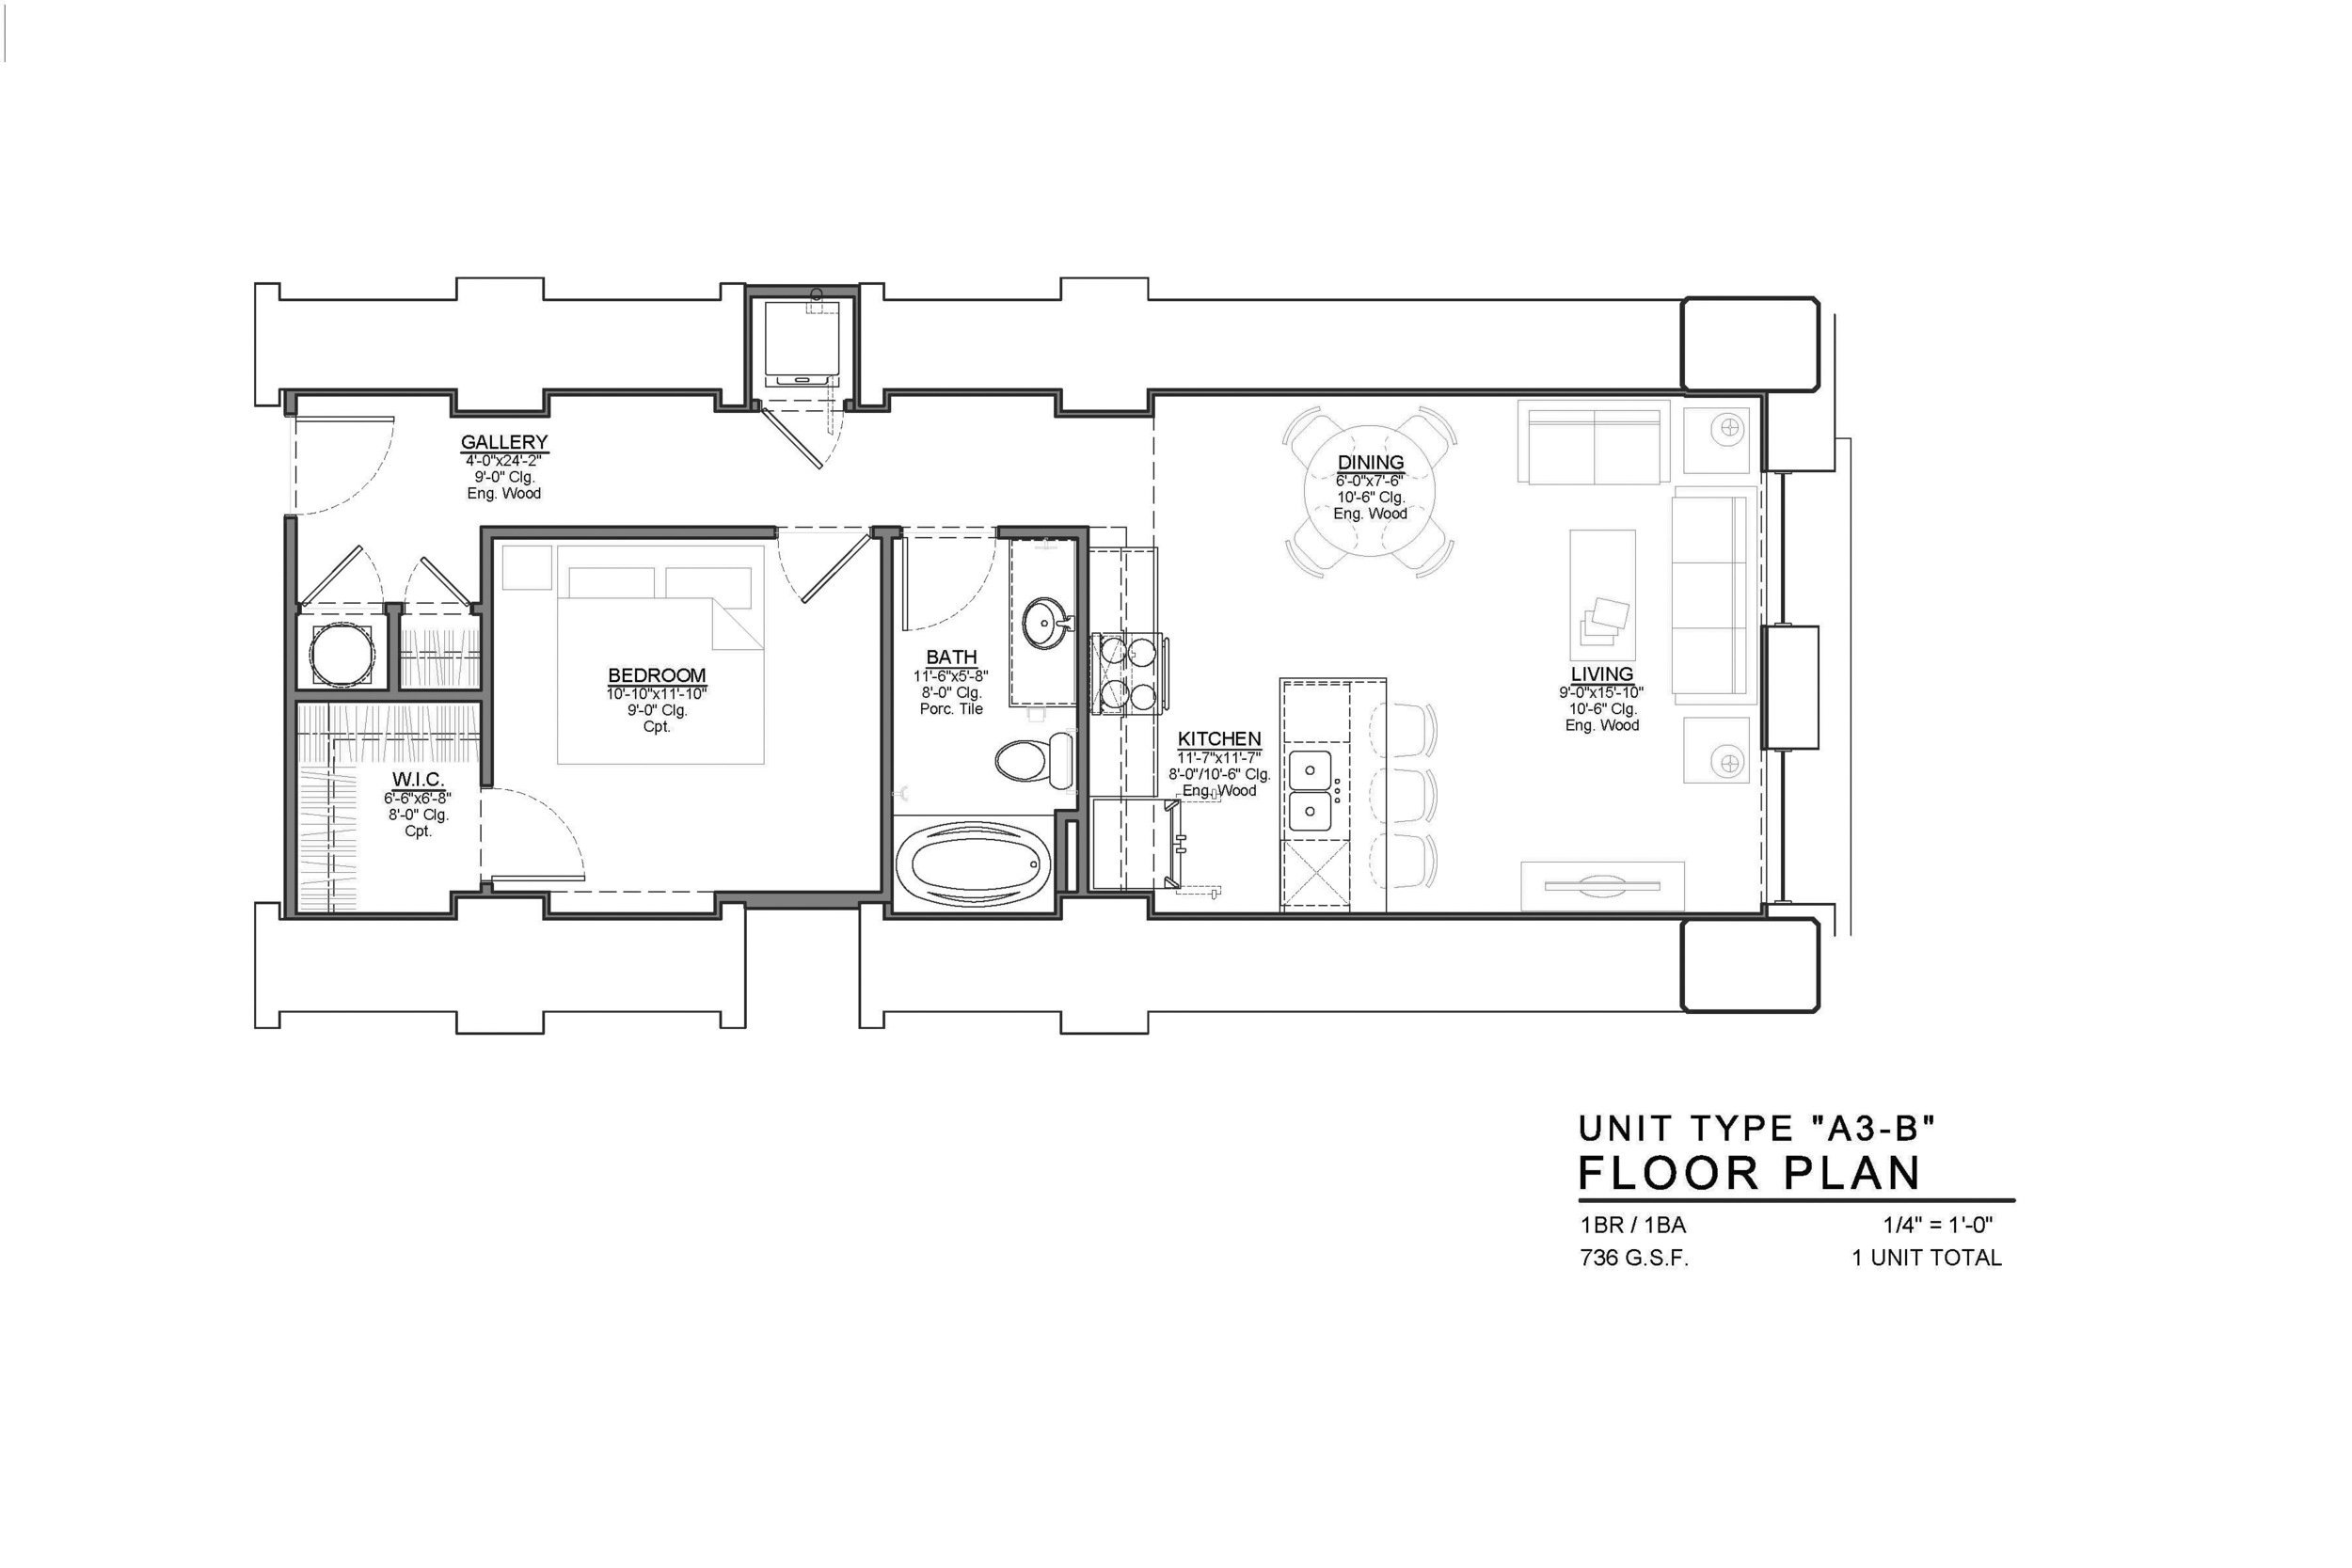 A3-B FLOOR PLAN: 1 BEDROOM / 1 BATH